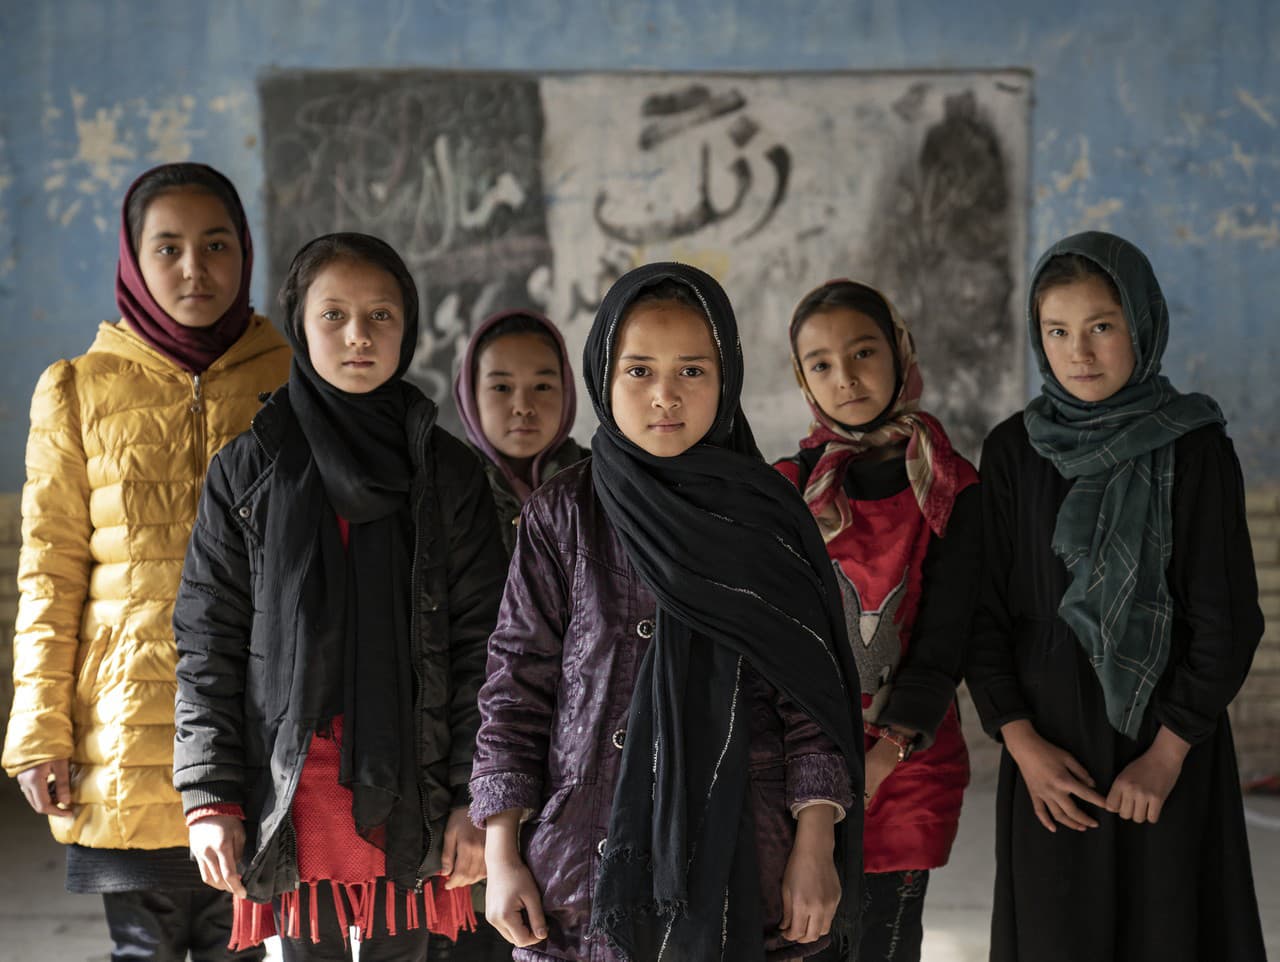 Afganské vládnuce hnutie Taliban zakázalo ženám navštevovať univerzity